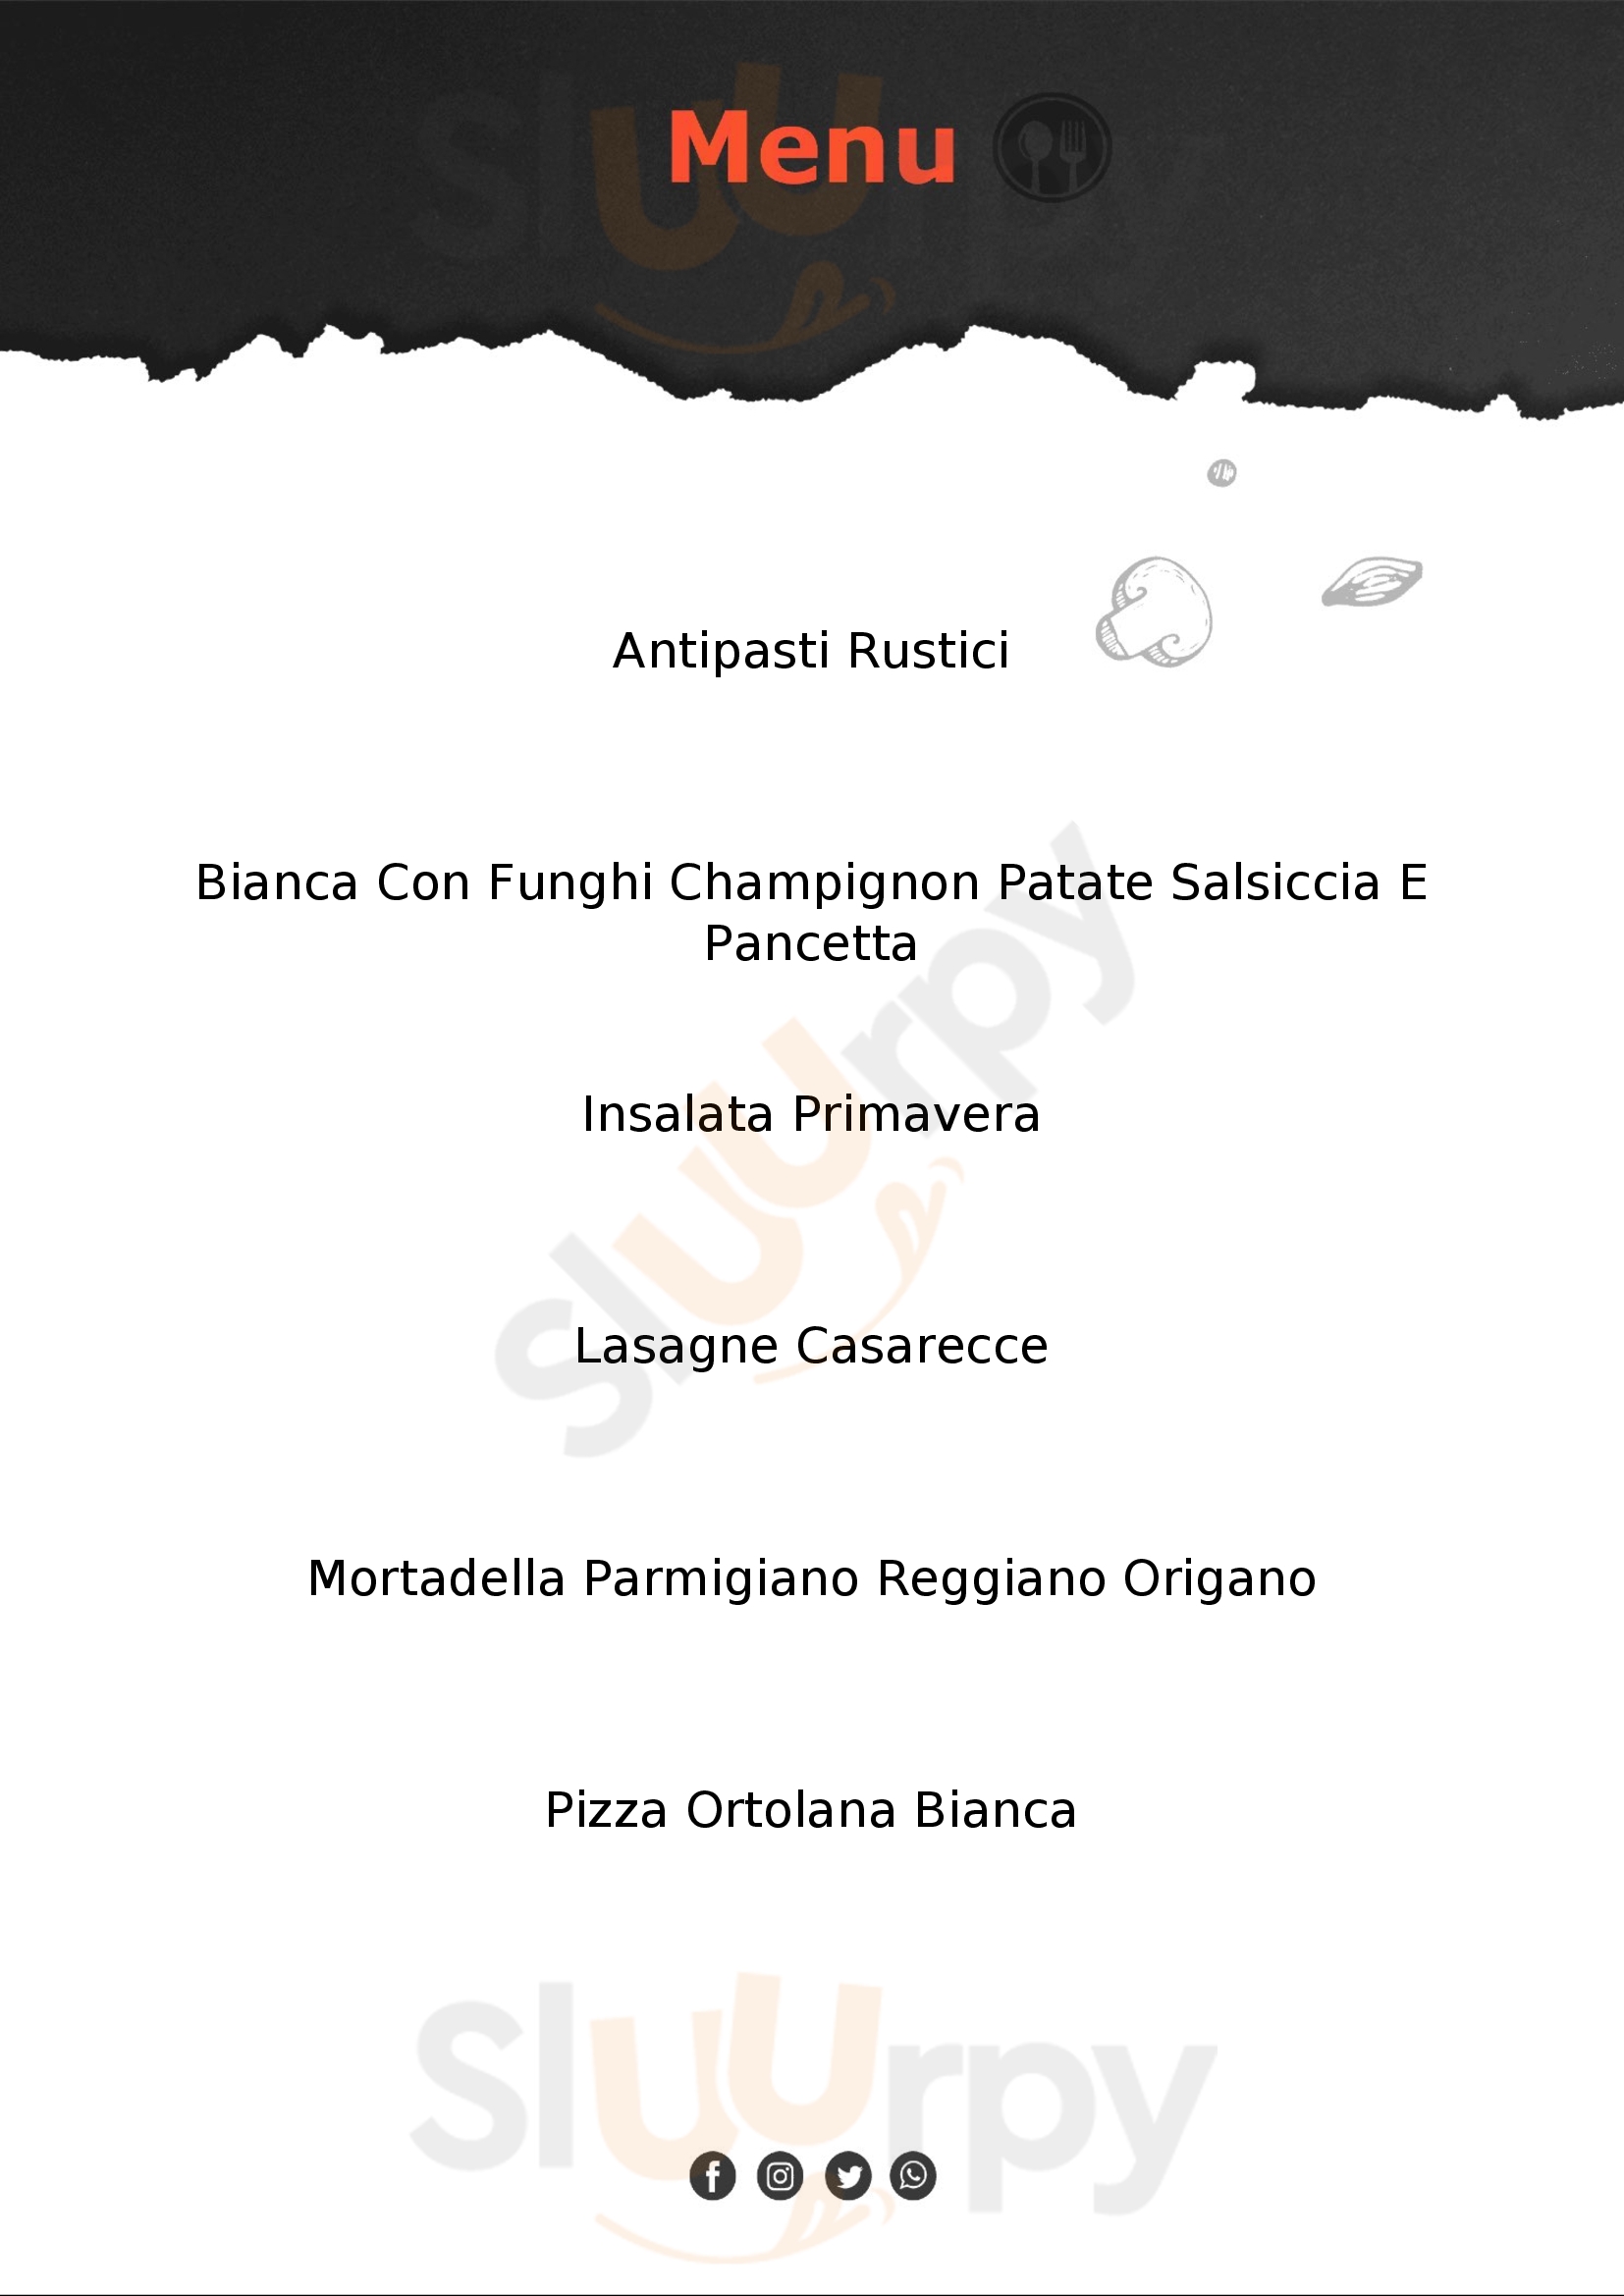 Il Passo Ristorante - Pizzeria - Braceria Capriglia Irpina menù 1 pagina